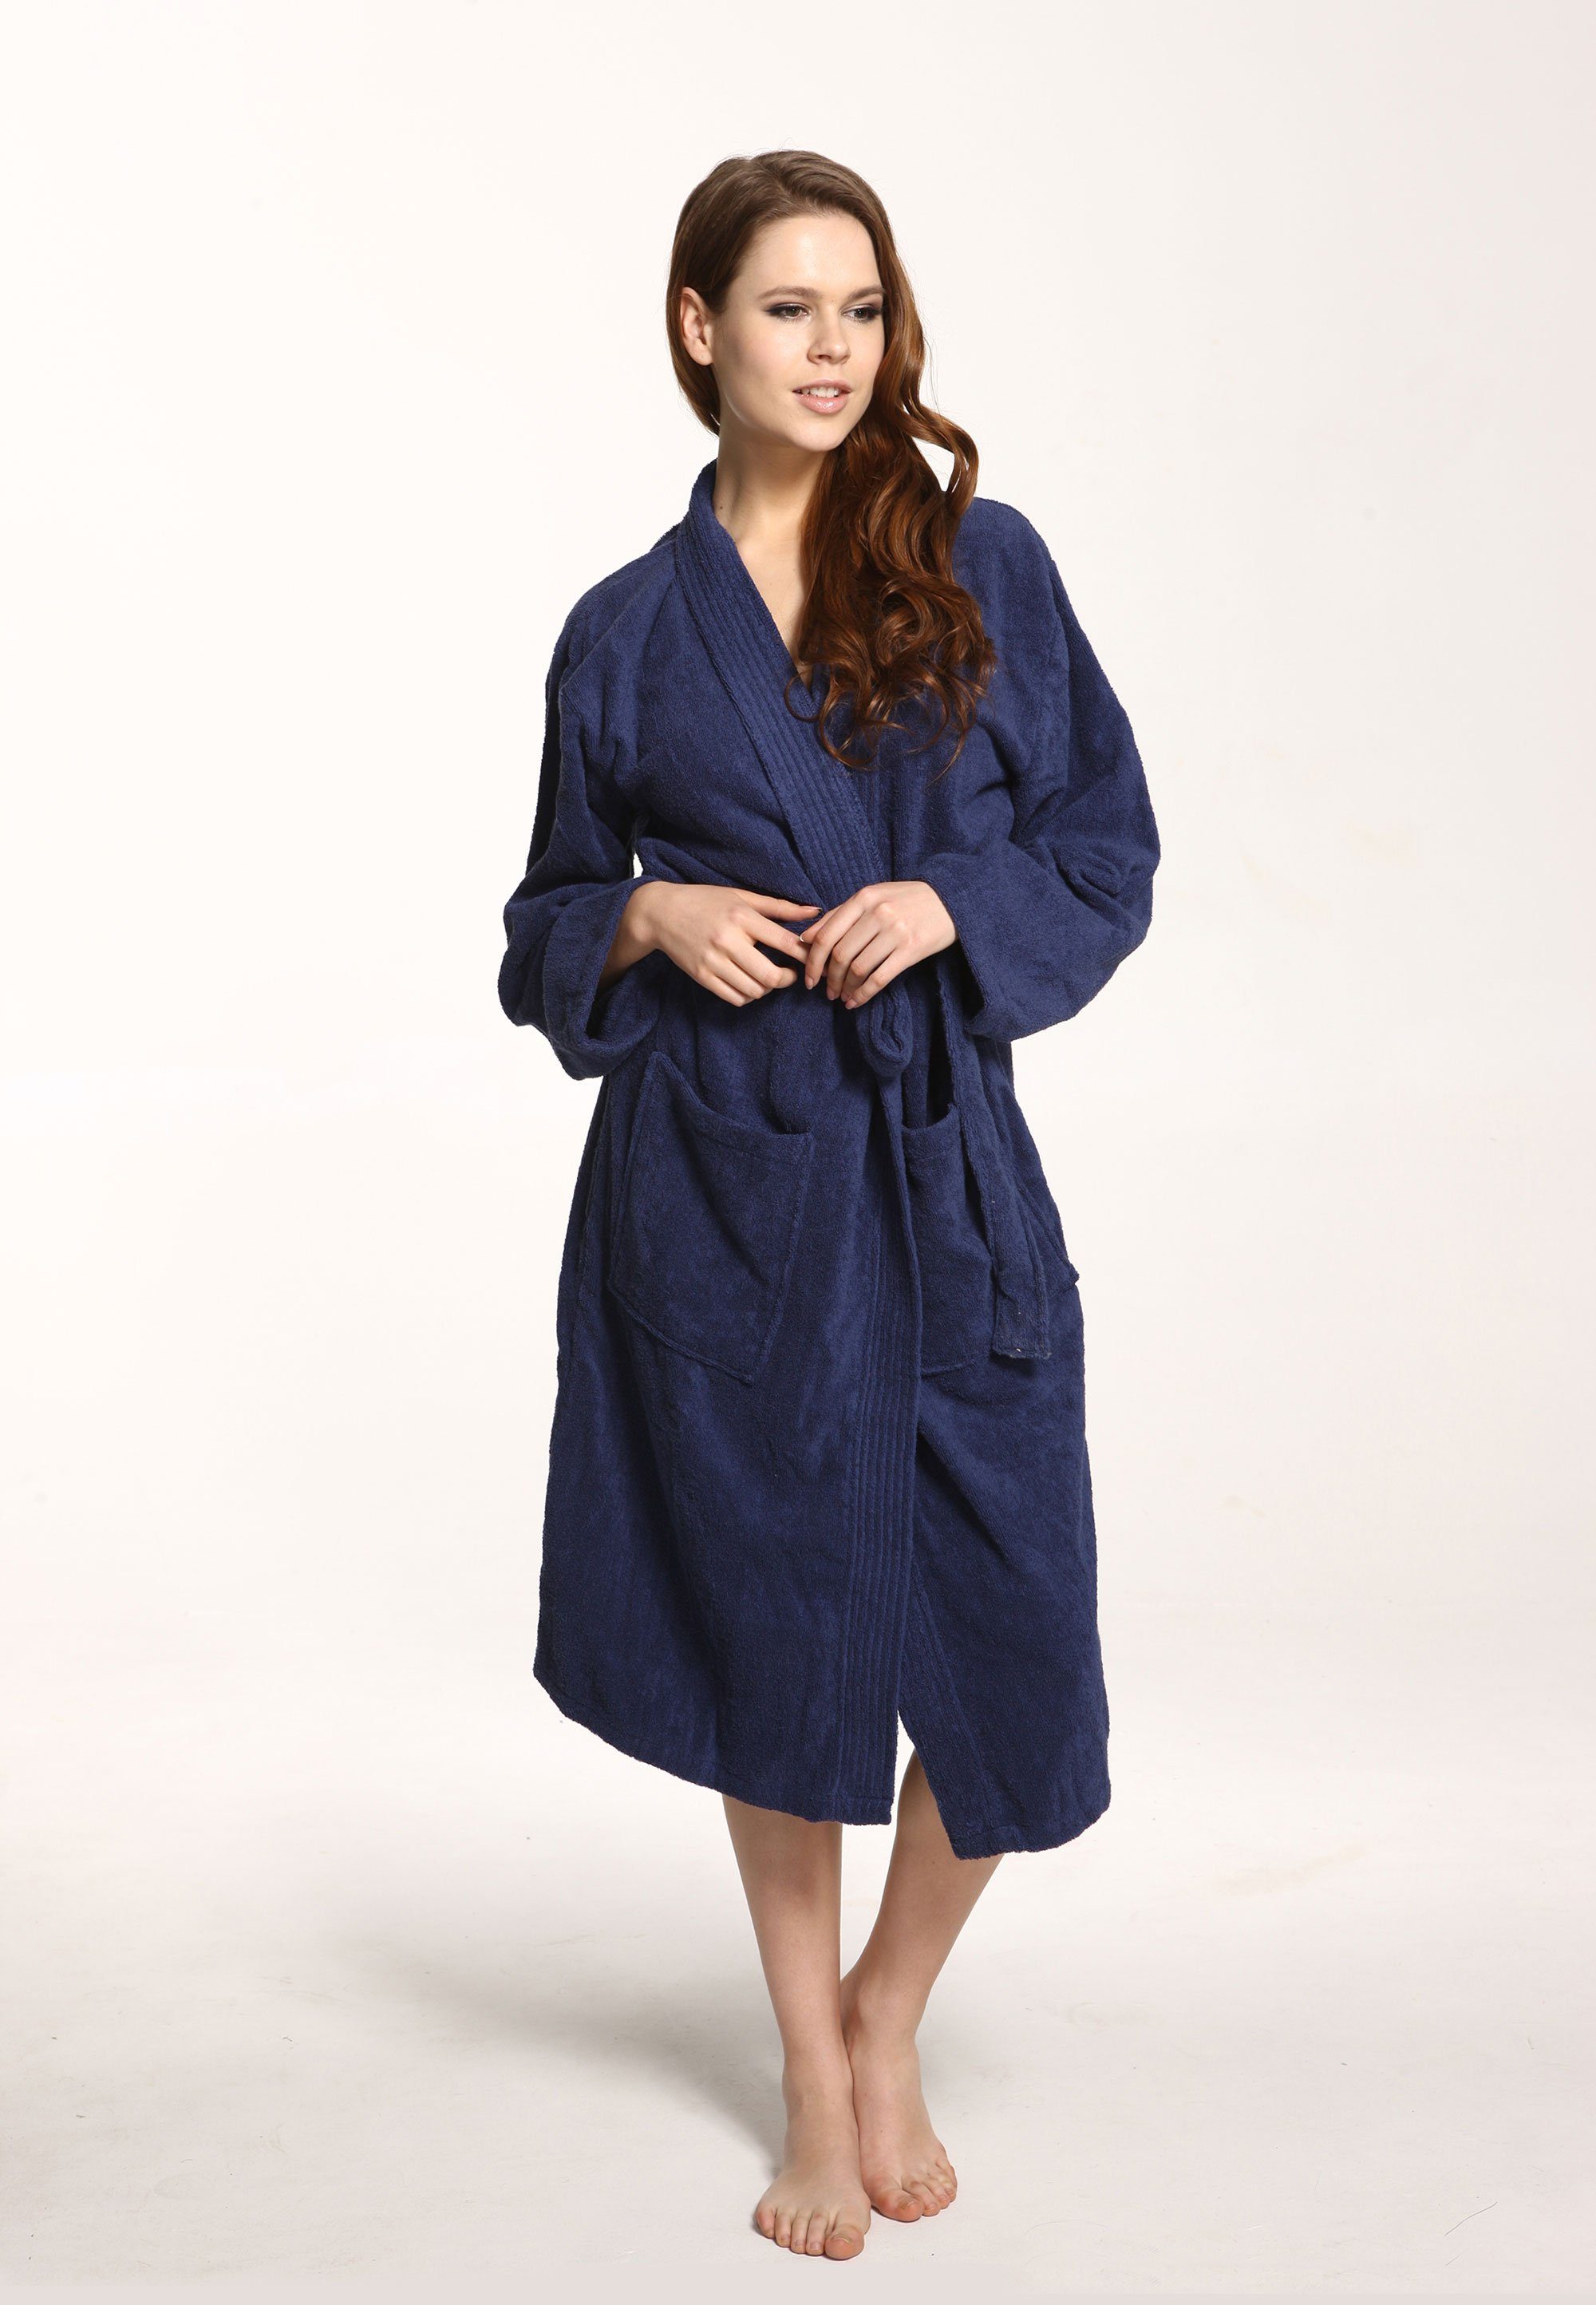 grace grand spa Bademantel Kimono, aus weicher Frottierware blau